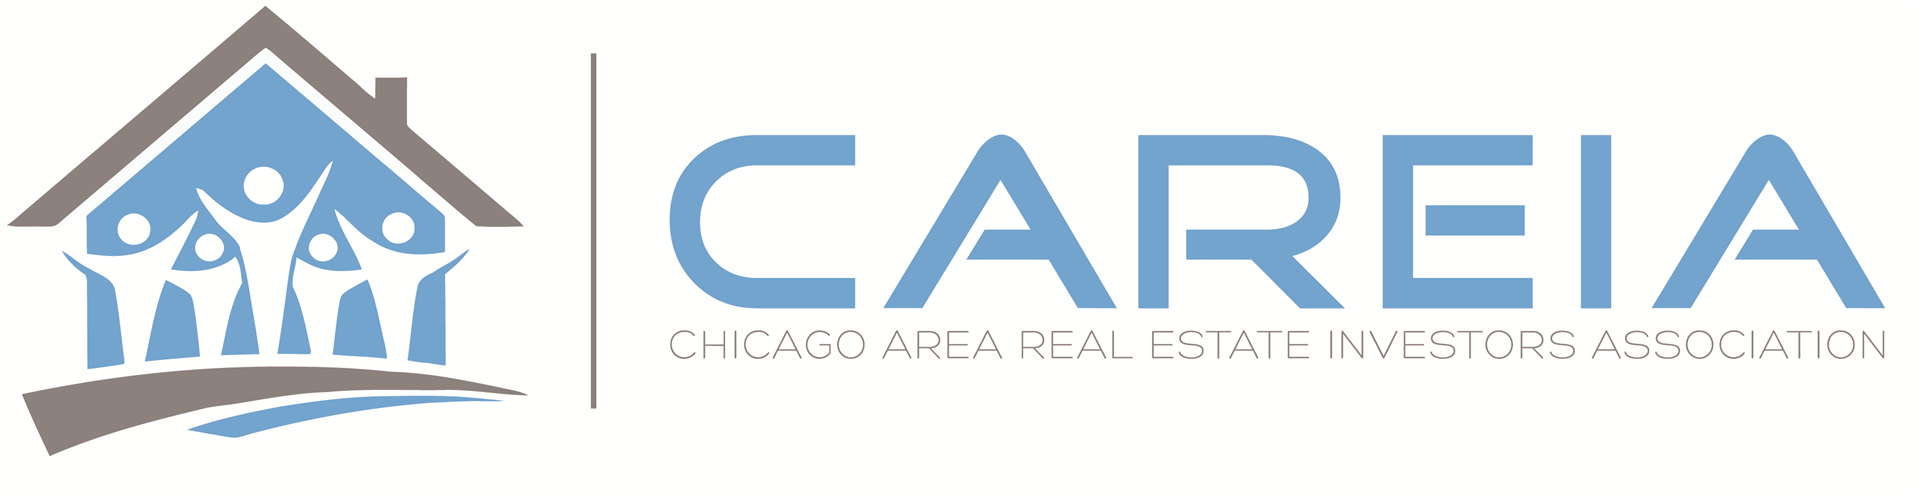 Chicago Area Real Estate Investors Association